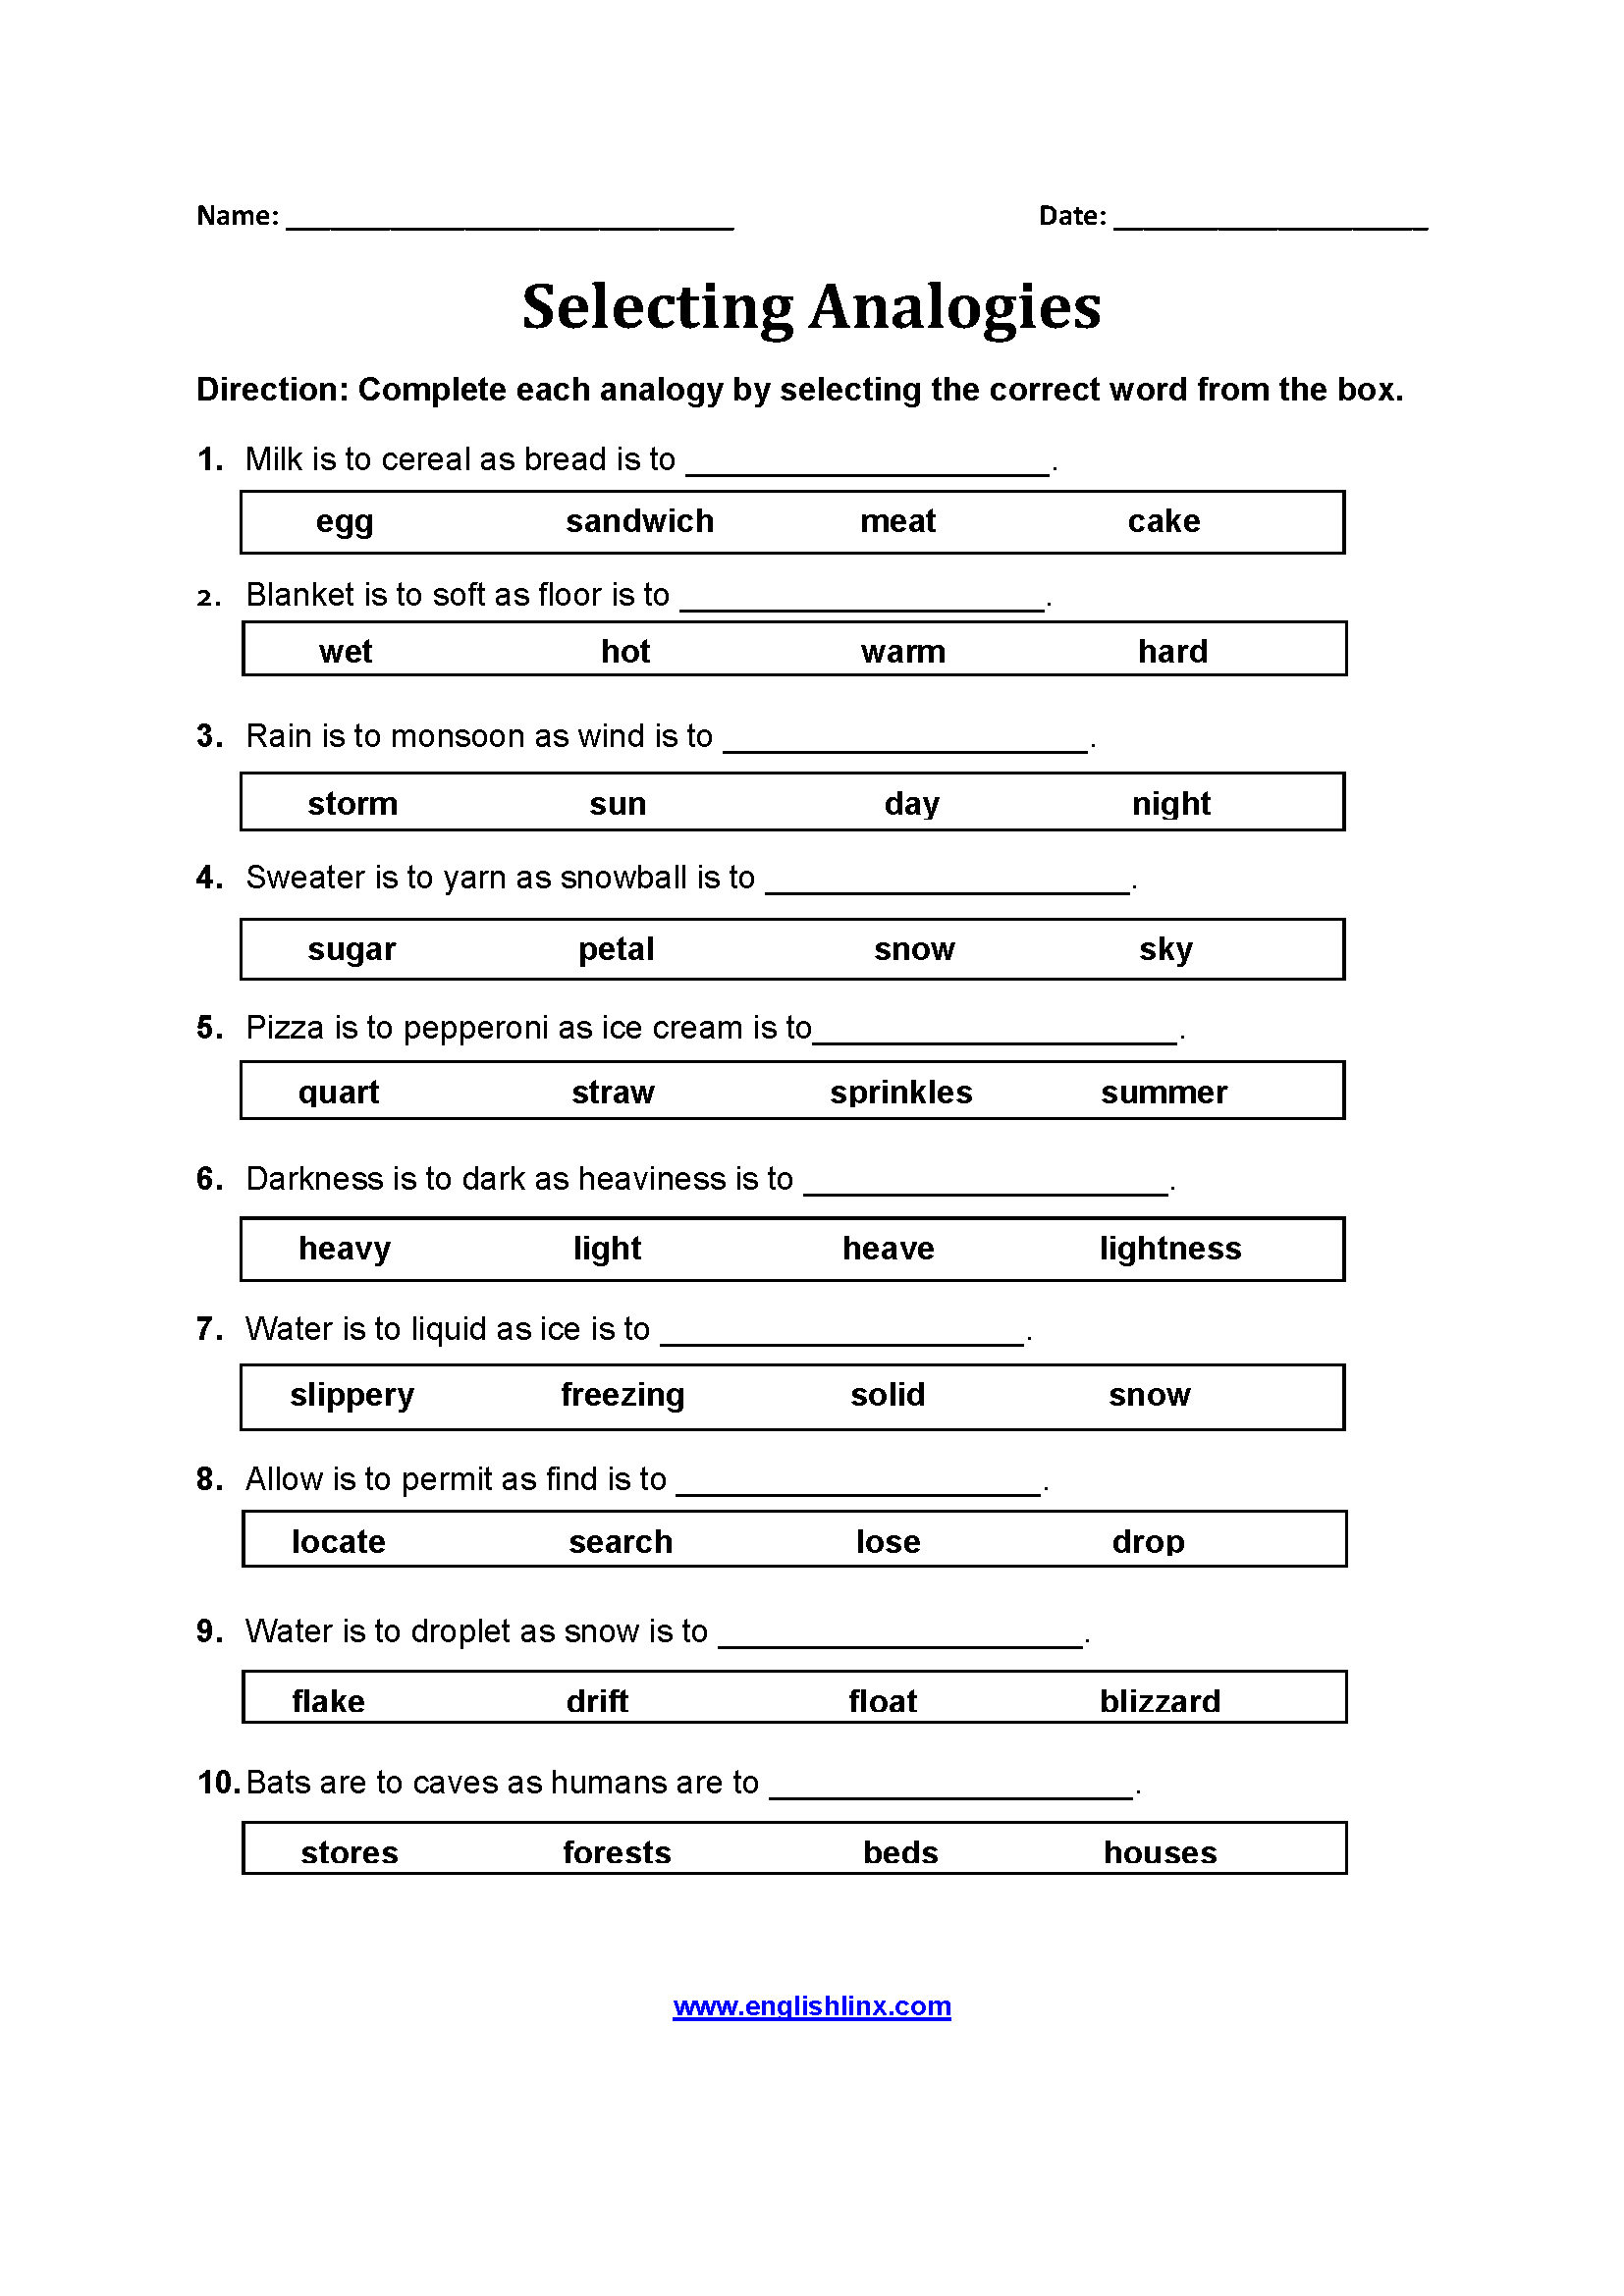 Analogy Worksheets For Middle School Printables Printable Worksheets